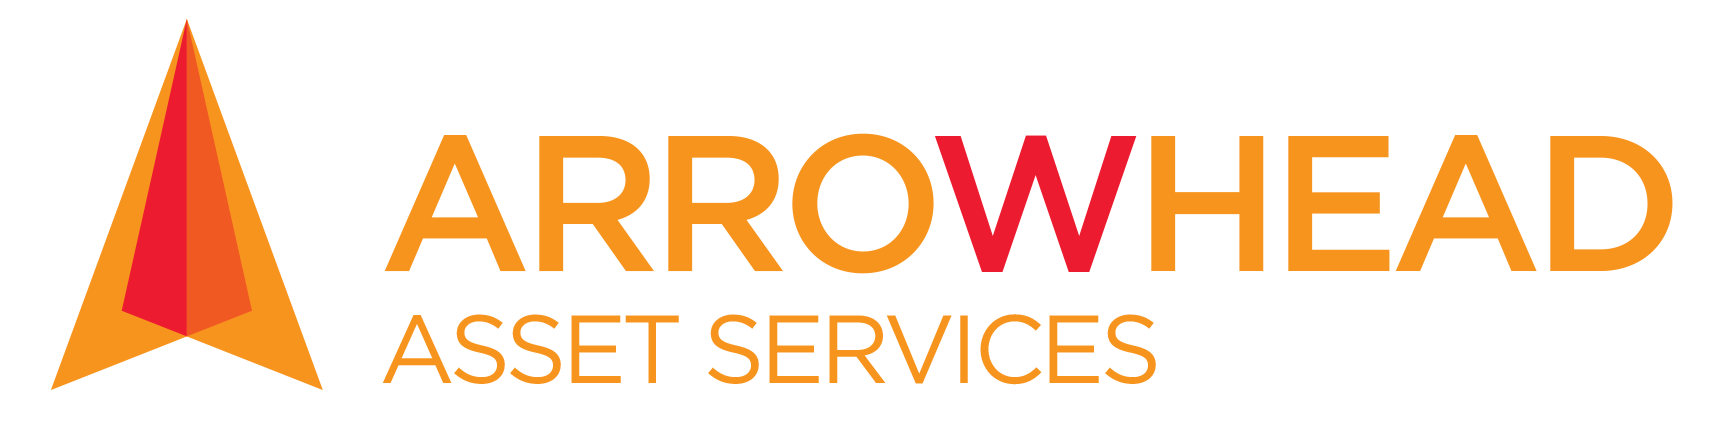 arrowhead asset services logo